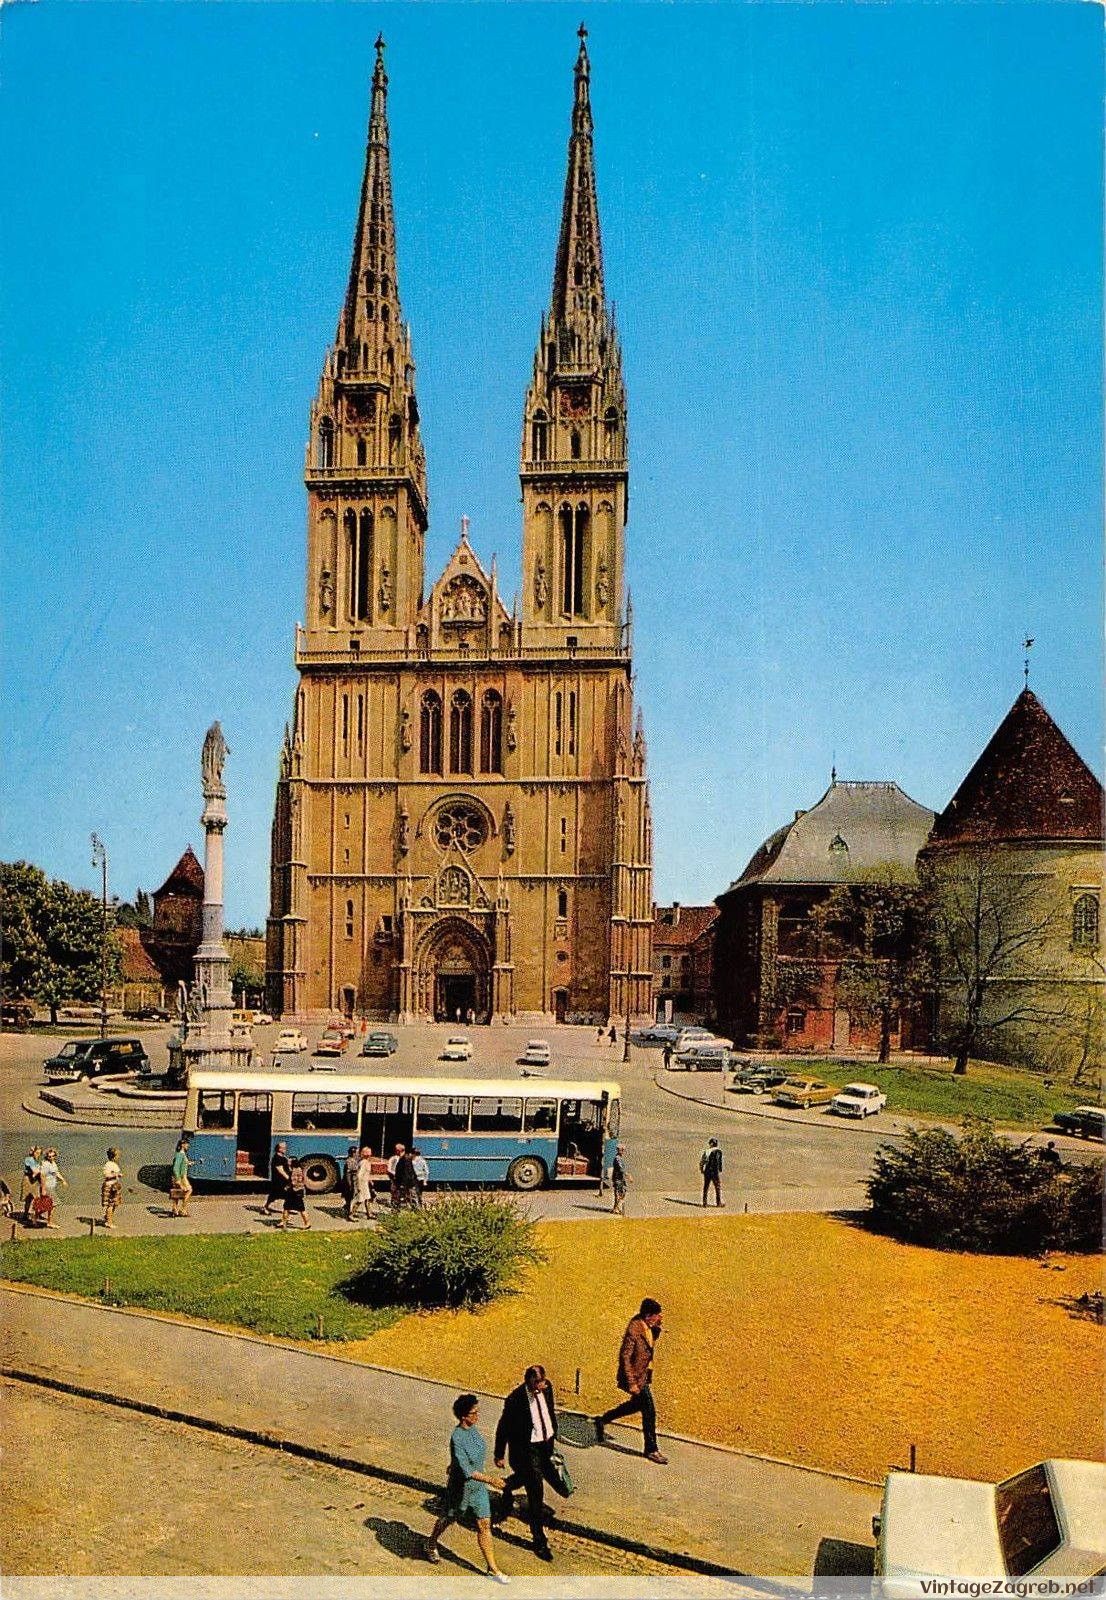 Kaptol i katedrala — oko 1970